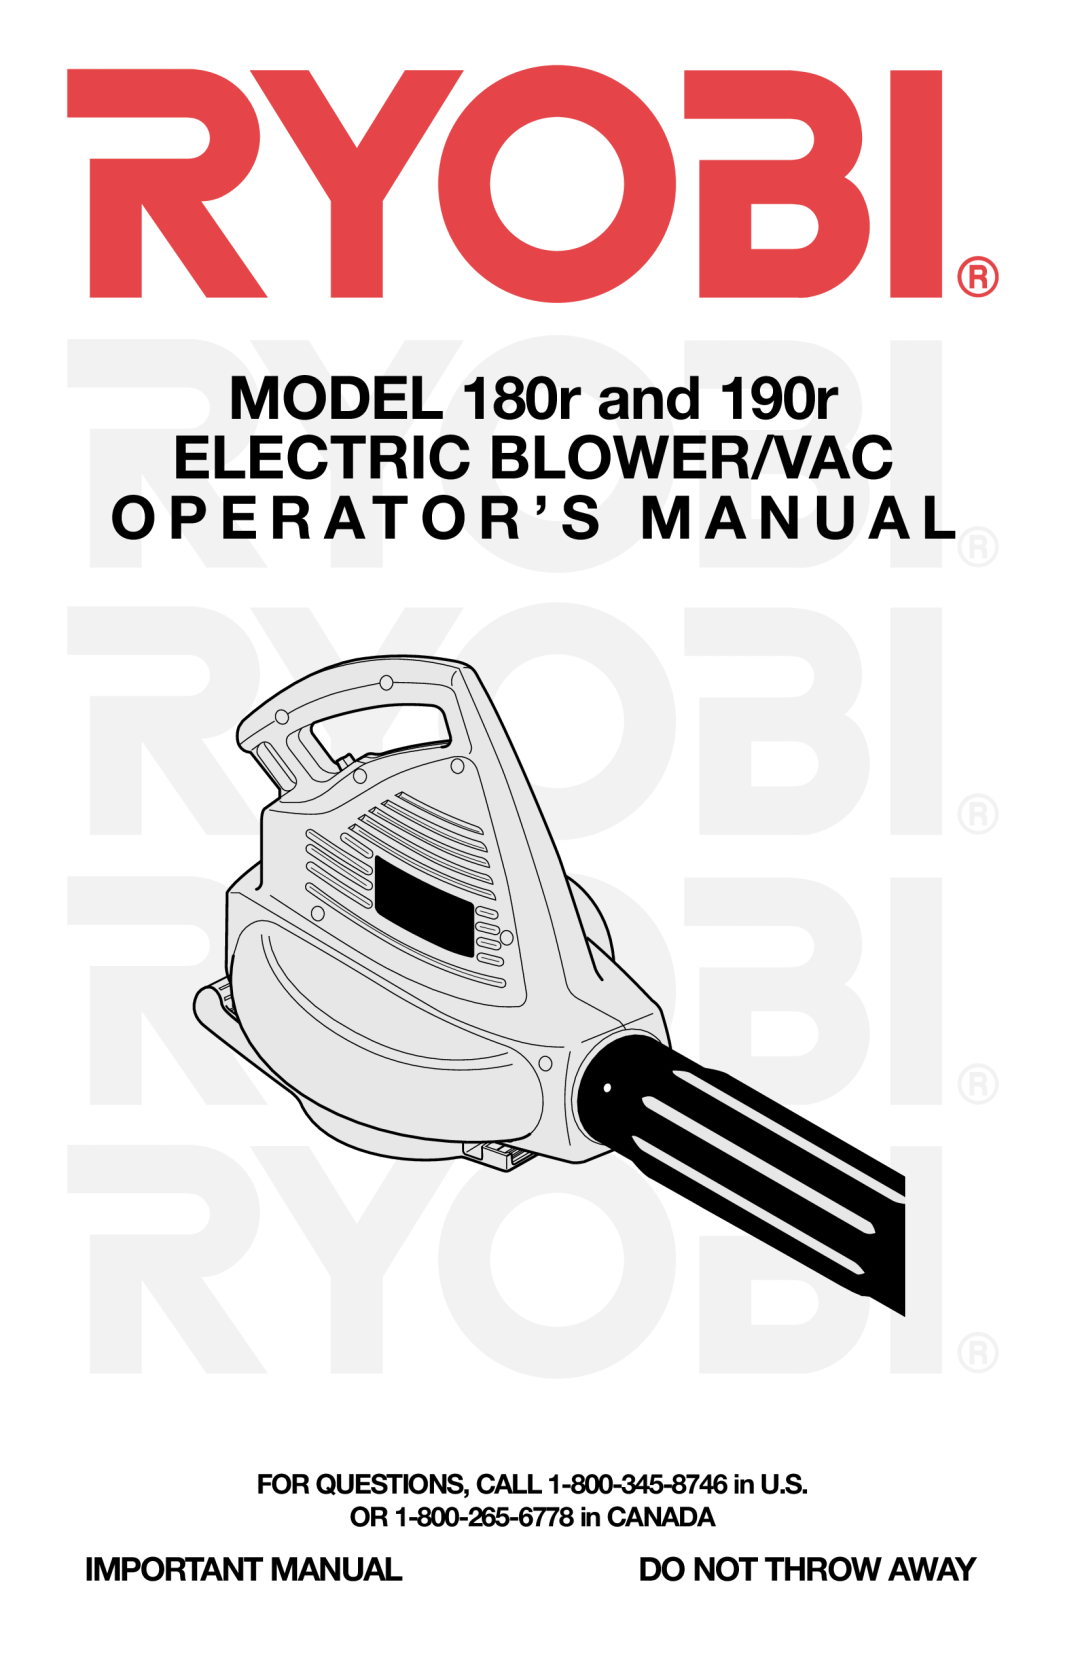 Ryobi 180r, 190r, 170r manual Important Manual, MODEL 180r and 190r ELECTRIC BLOWER/VAC, O P E R At O R ’ S M A N U A L 